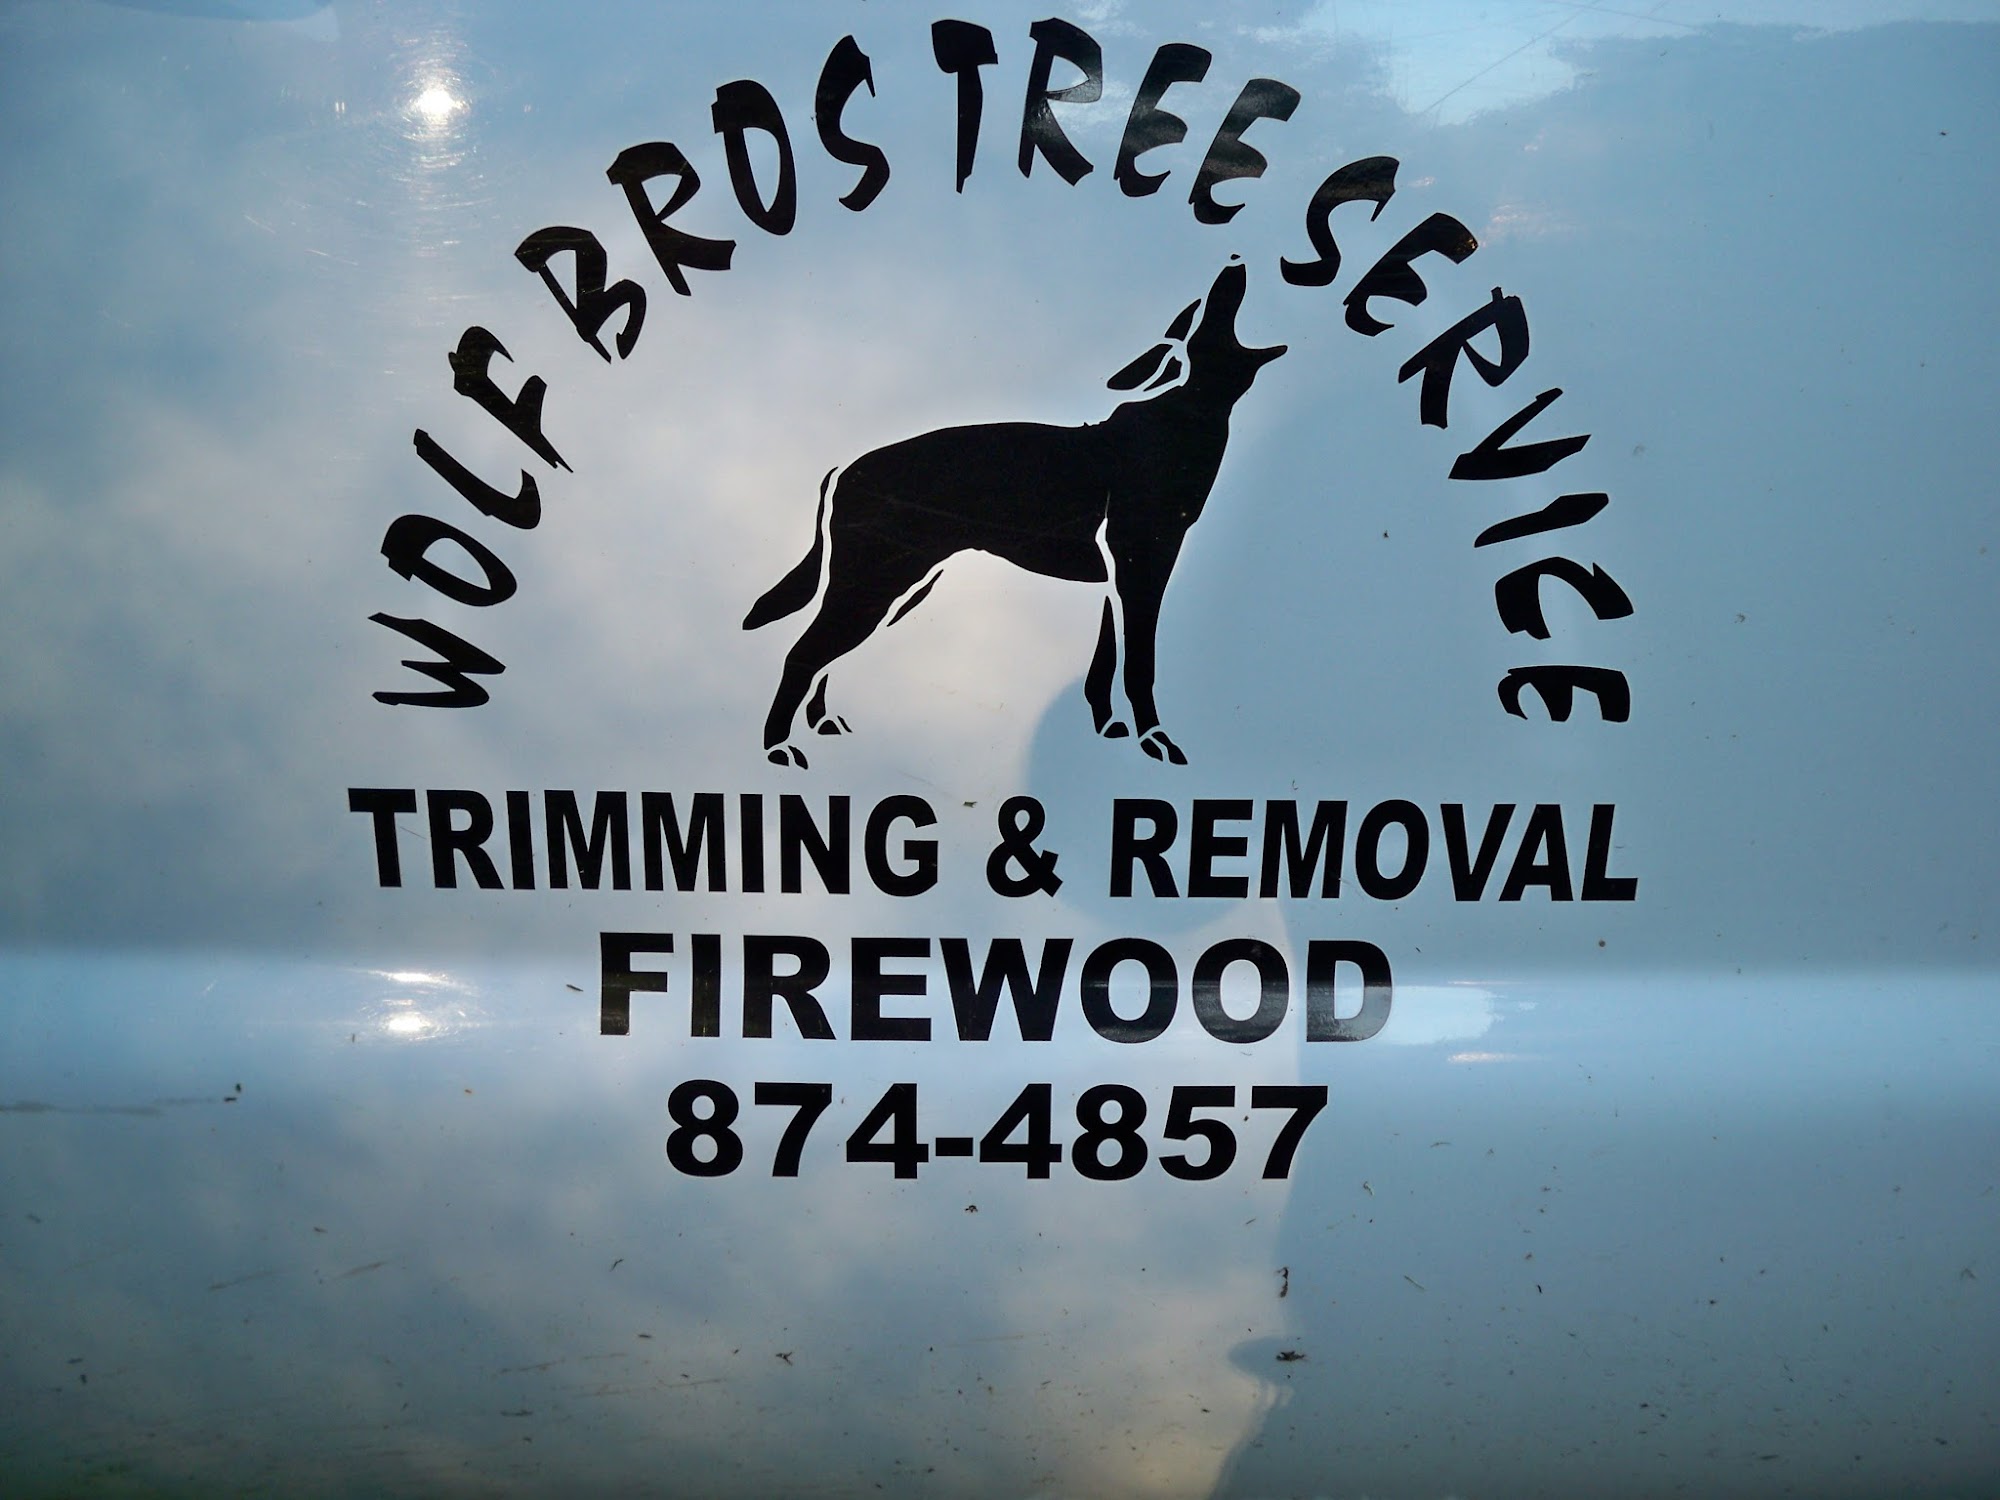 Wolf Bros.tree Service